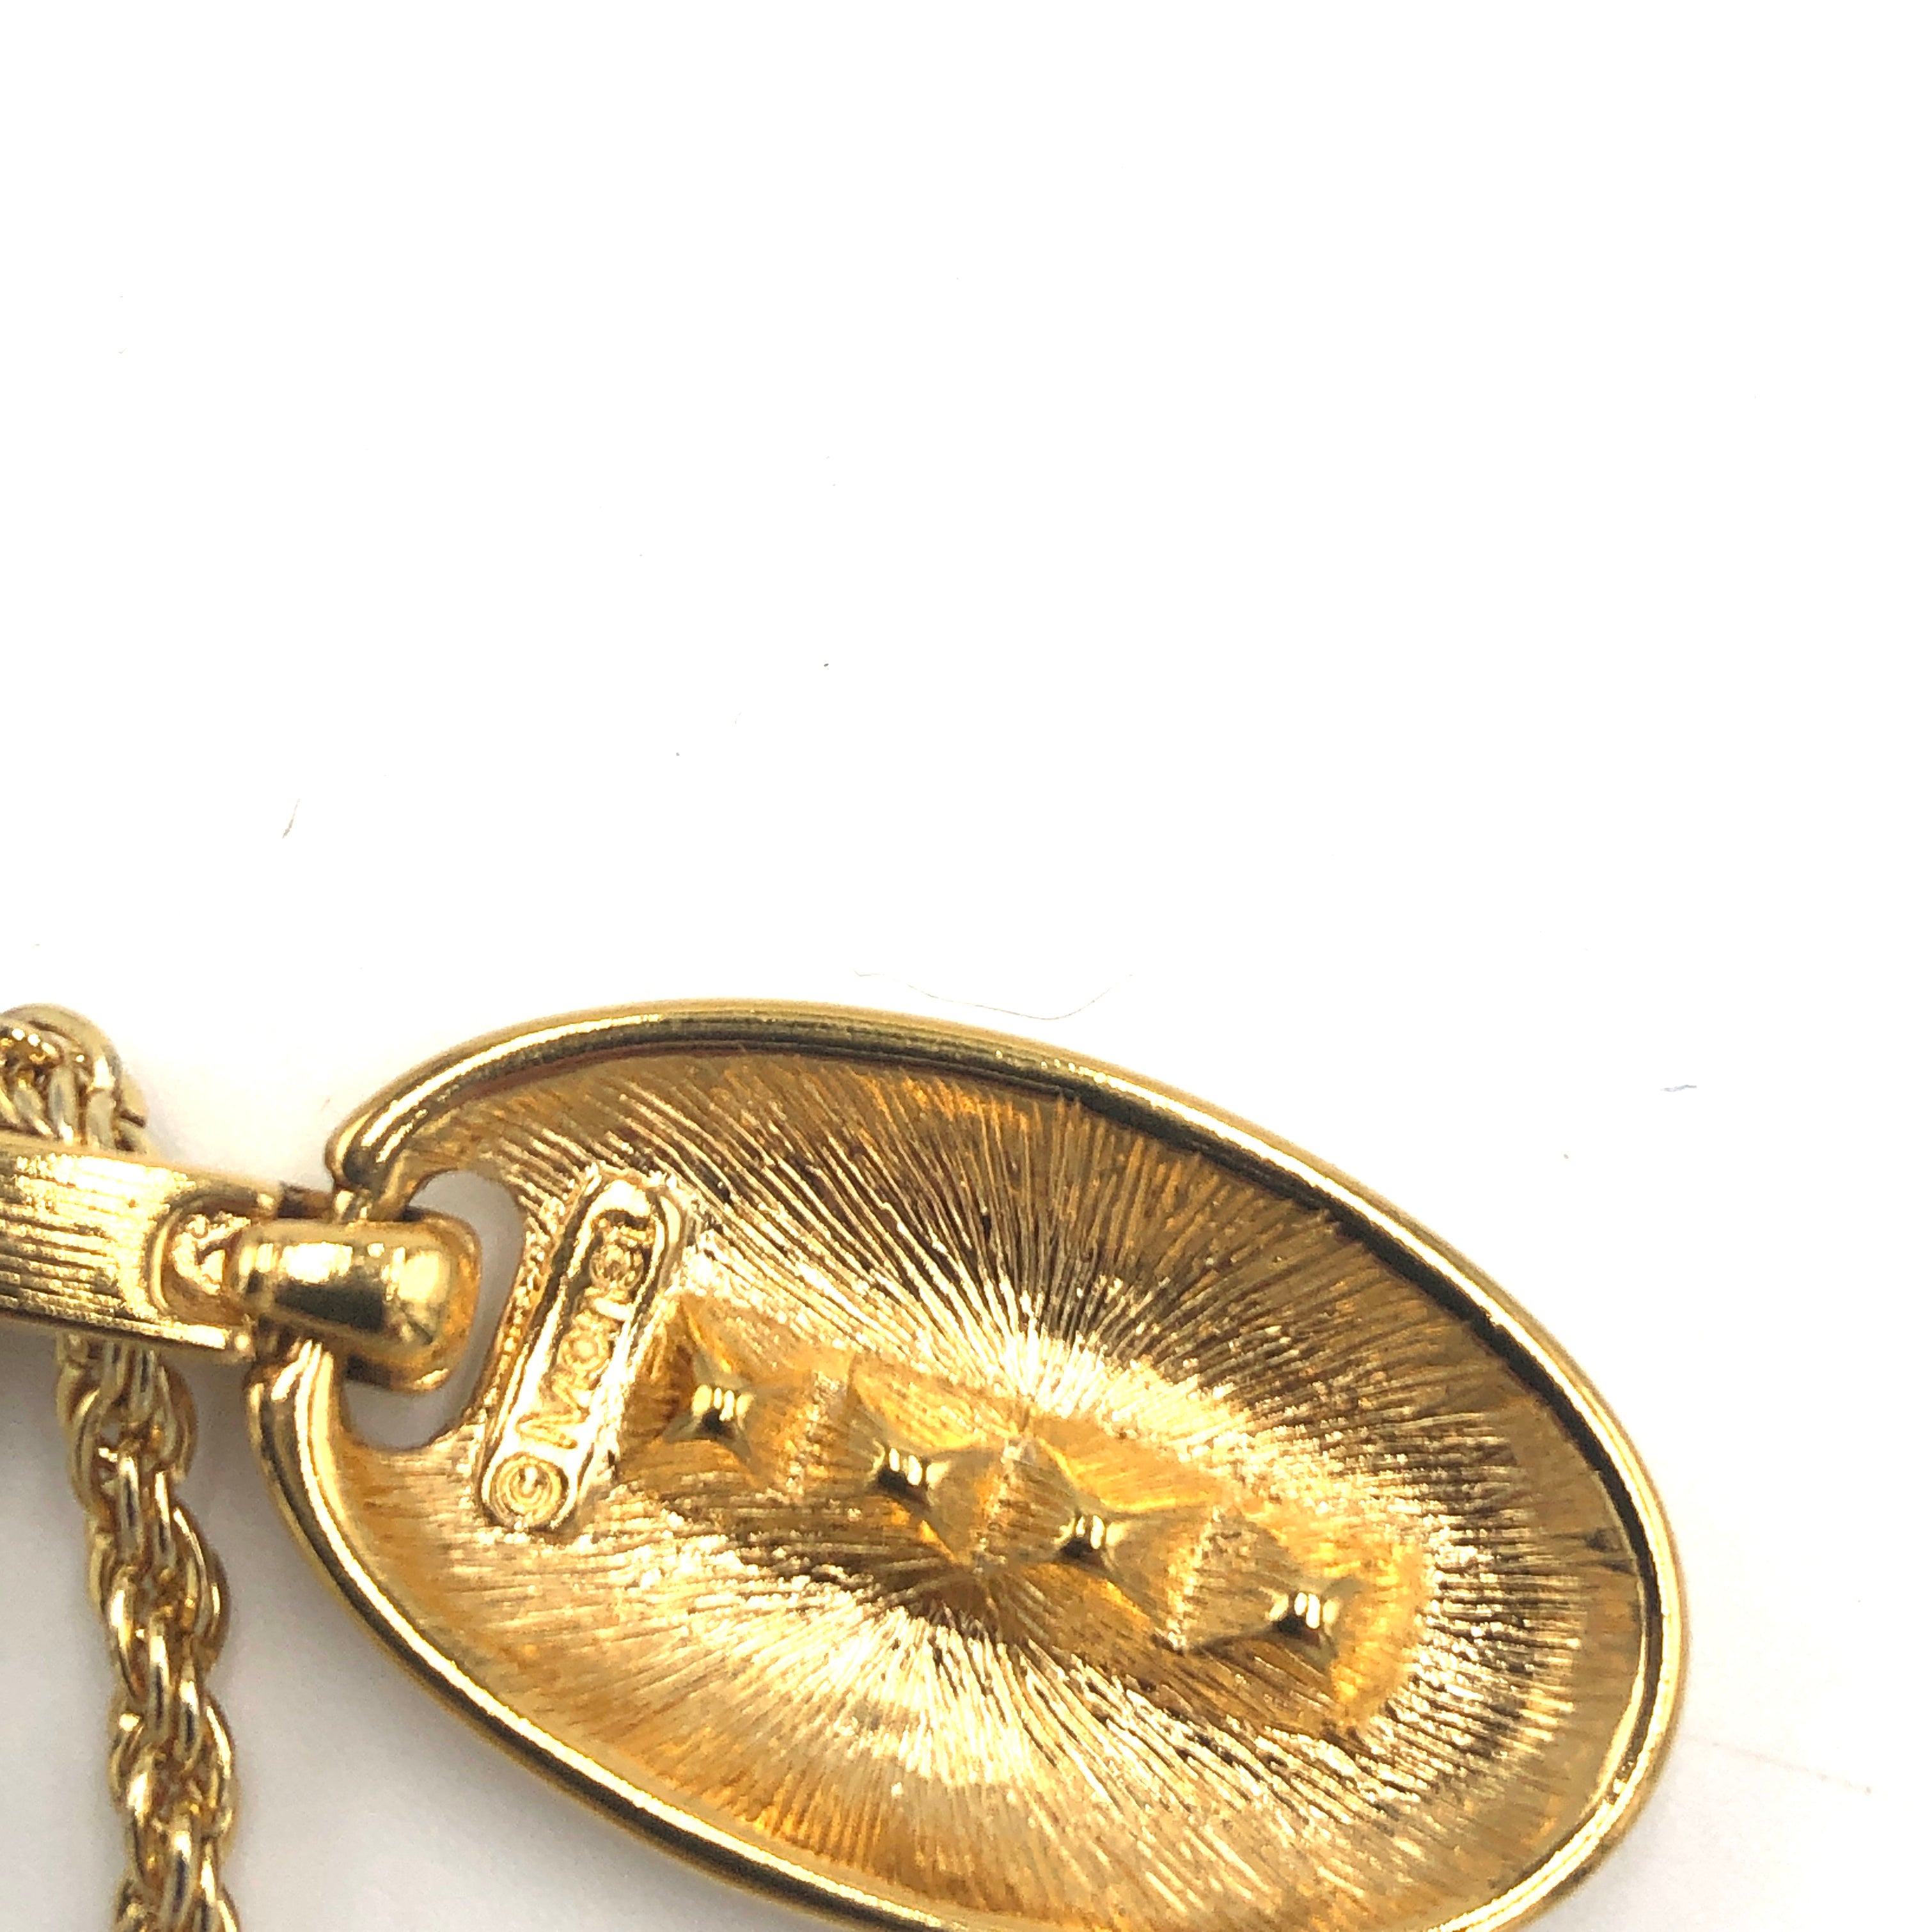 Finery Vintage Necklace - Gold